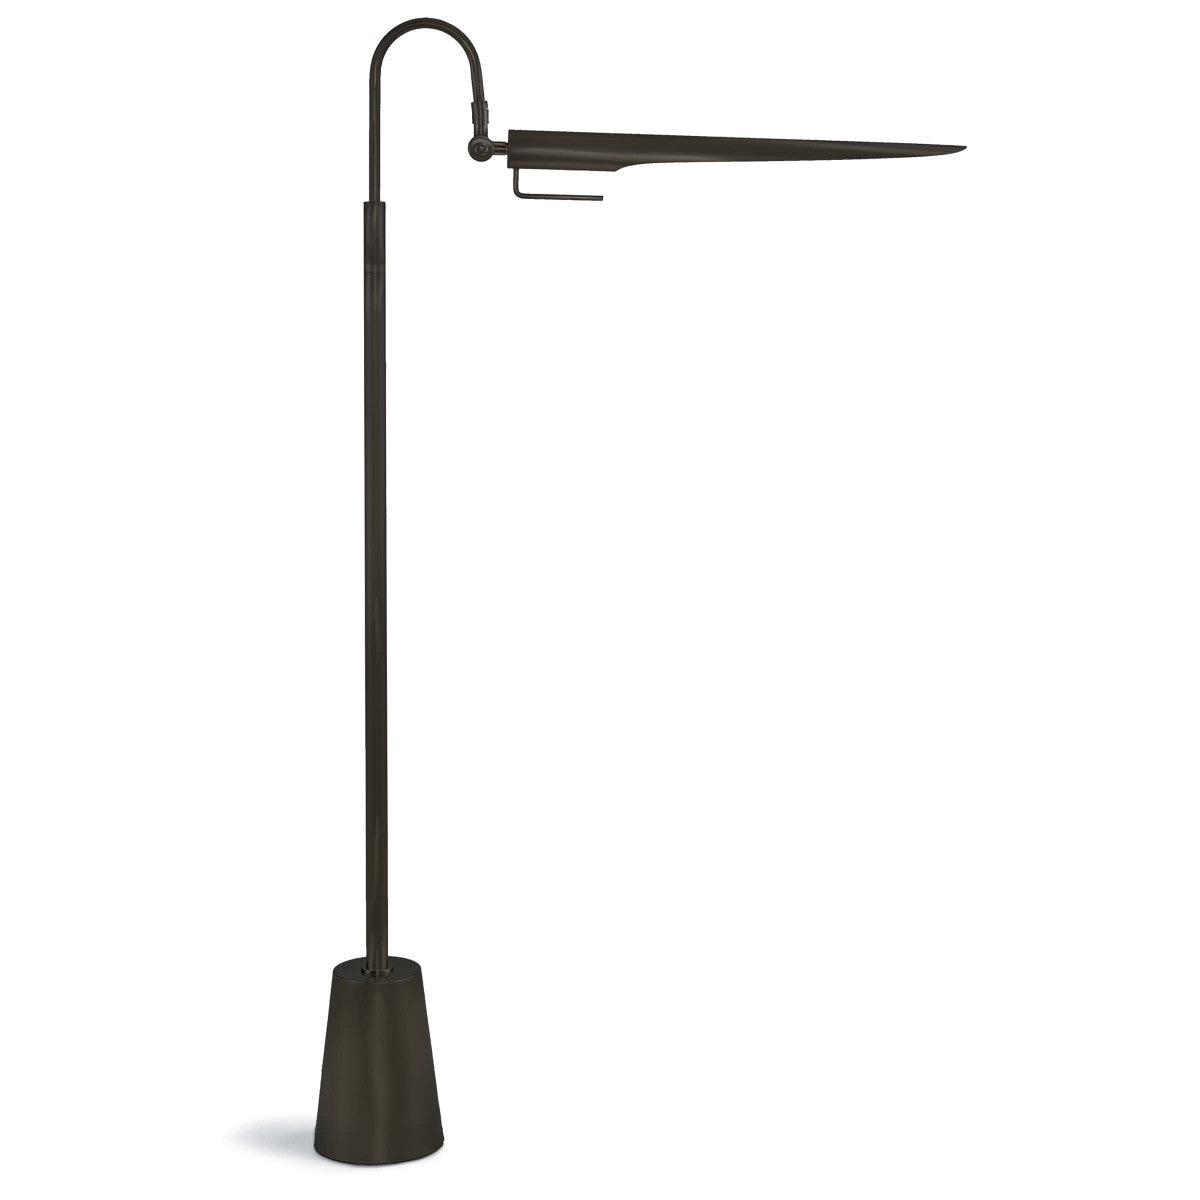 bronze floor lamp with pointed edge